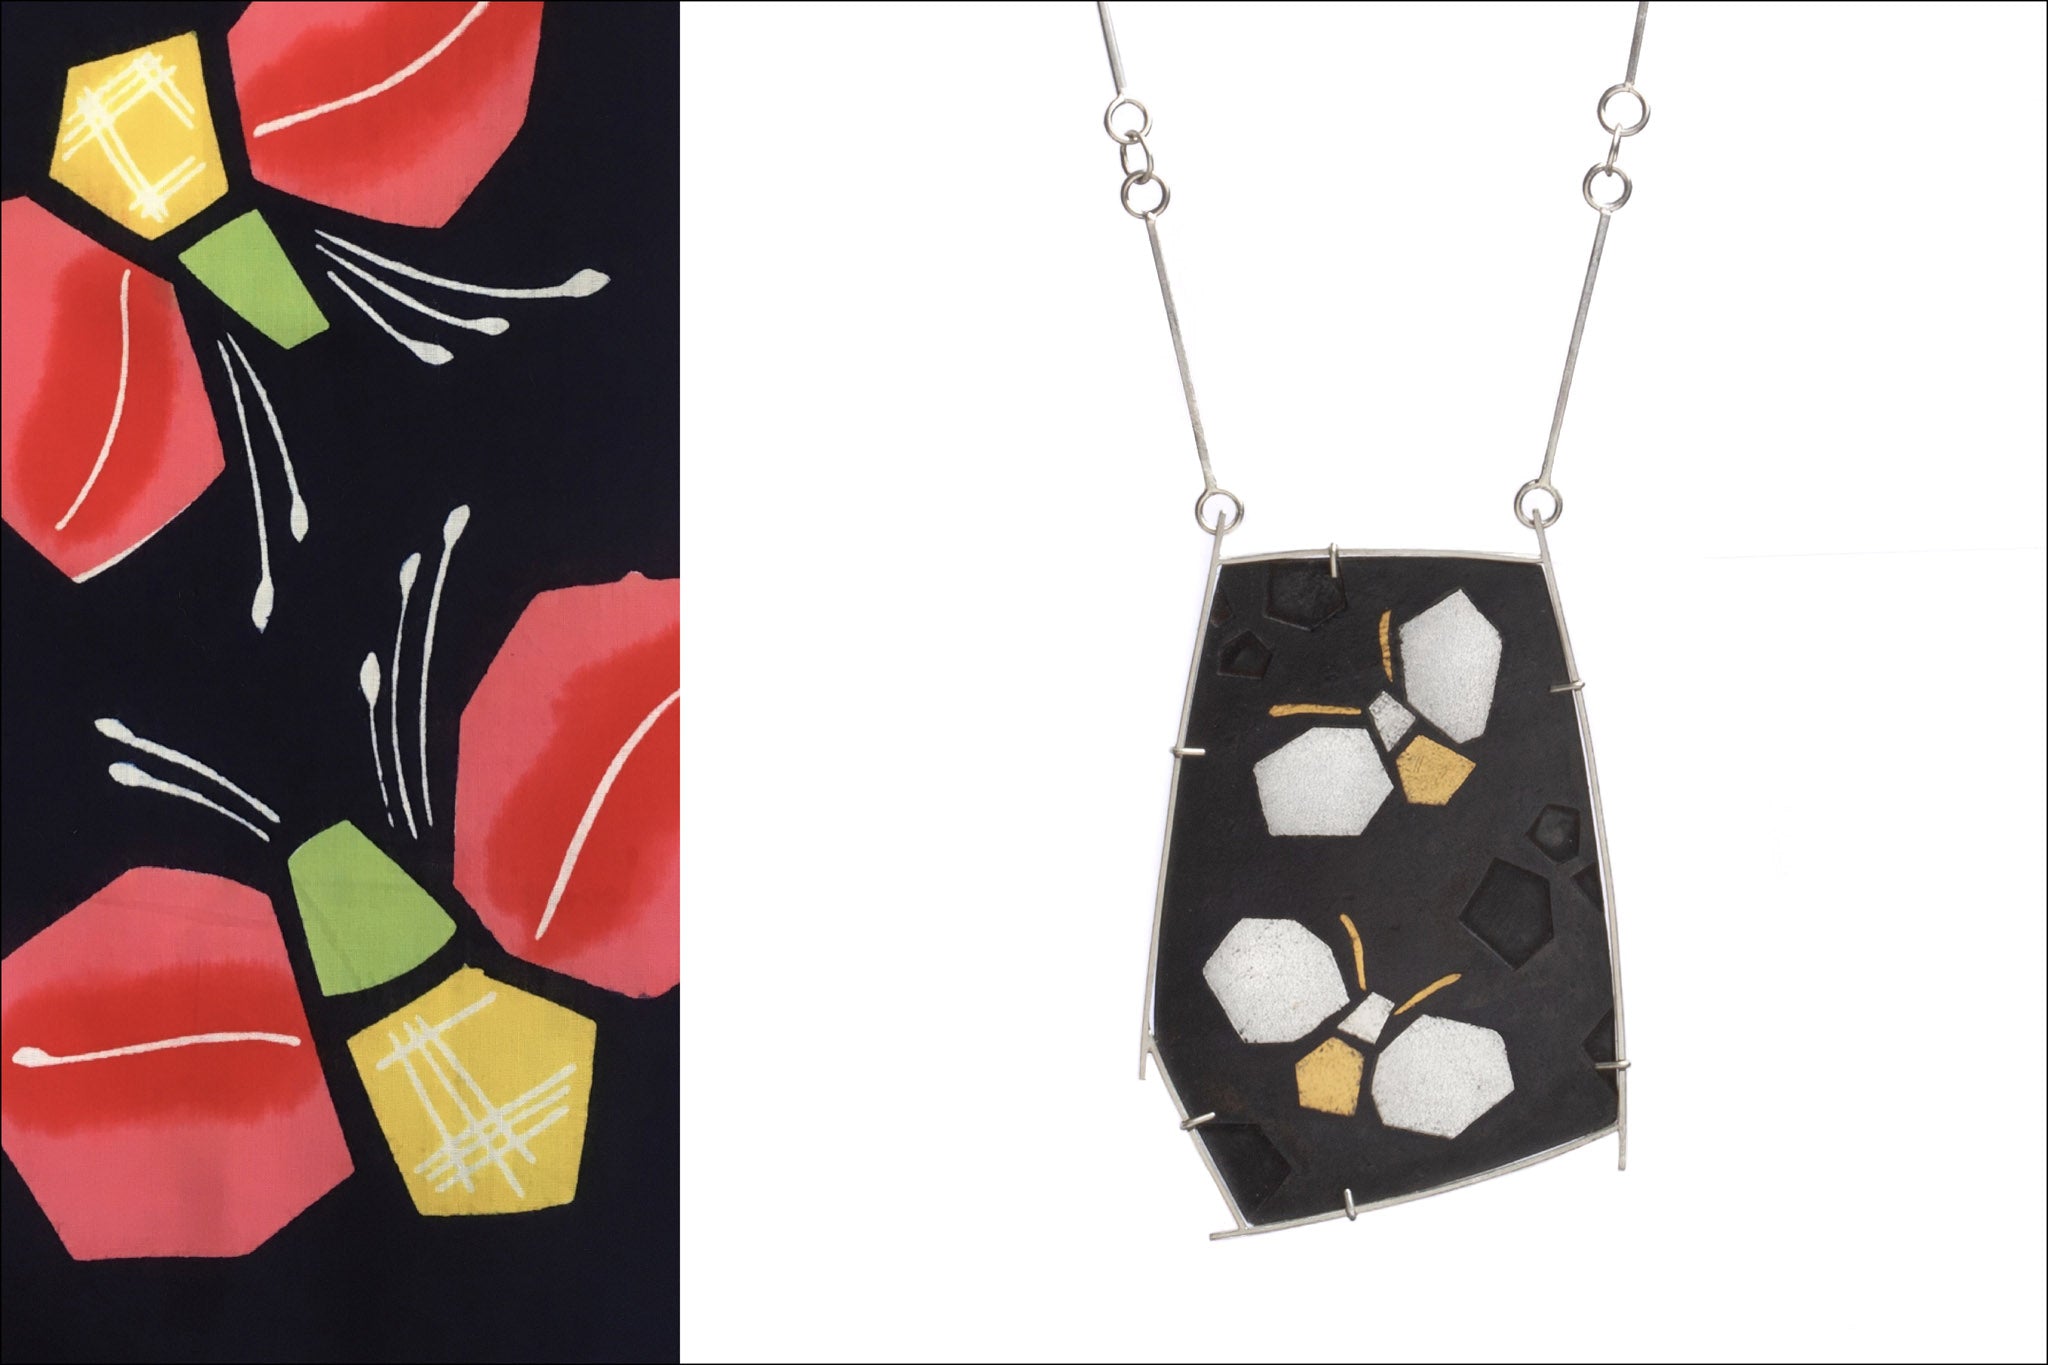 Fireflies, a necklace by Maru Almeida for the Yukata Jewelry Show 2022—a creative collaboration between Okan Arts and Danaca Design